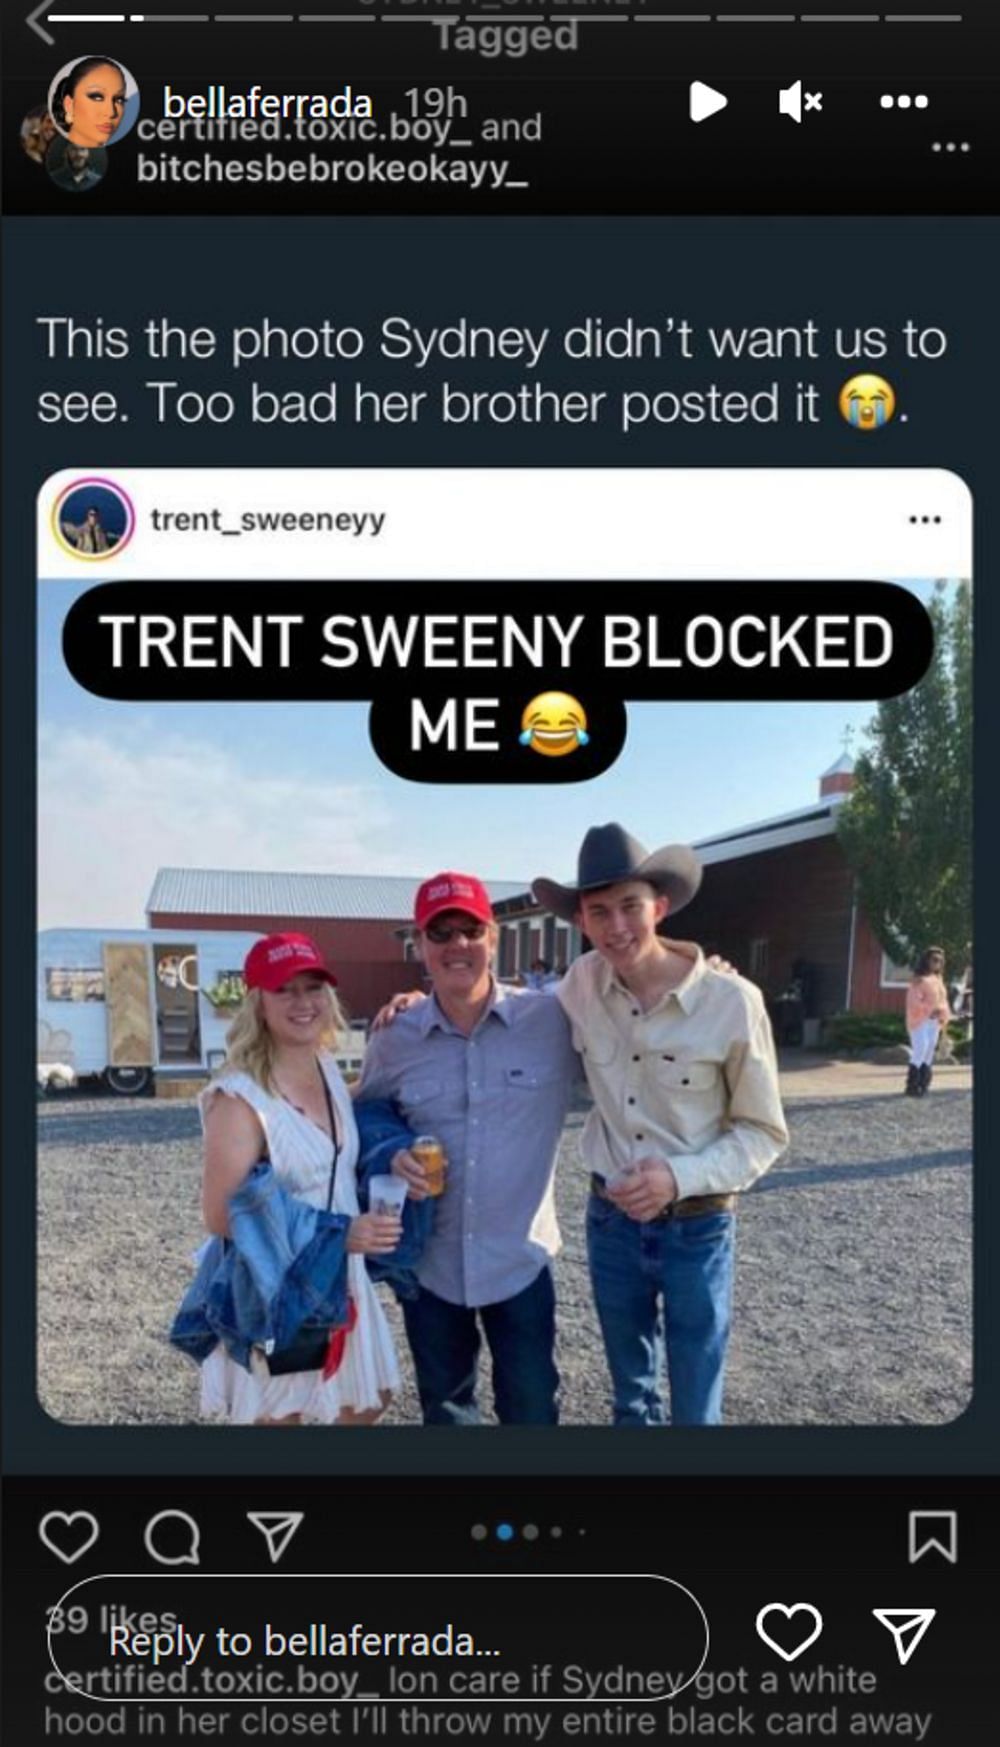 Bella Ferrada claims Trent Sweeney blocked her on Instagram (Image via bellaferrada/Instagram)